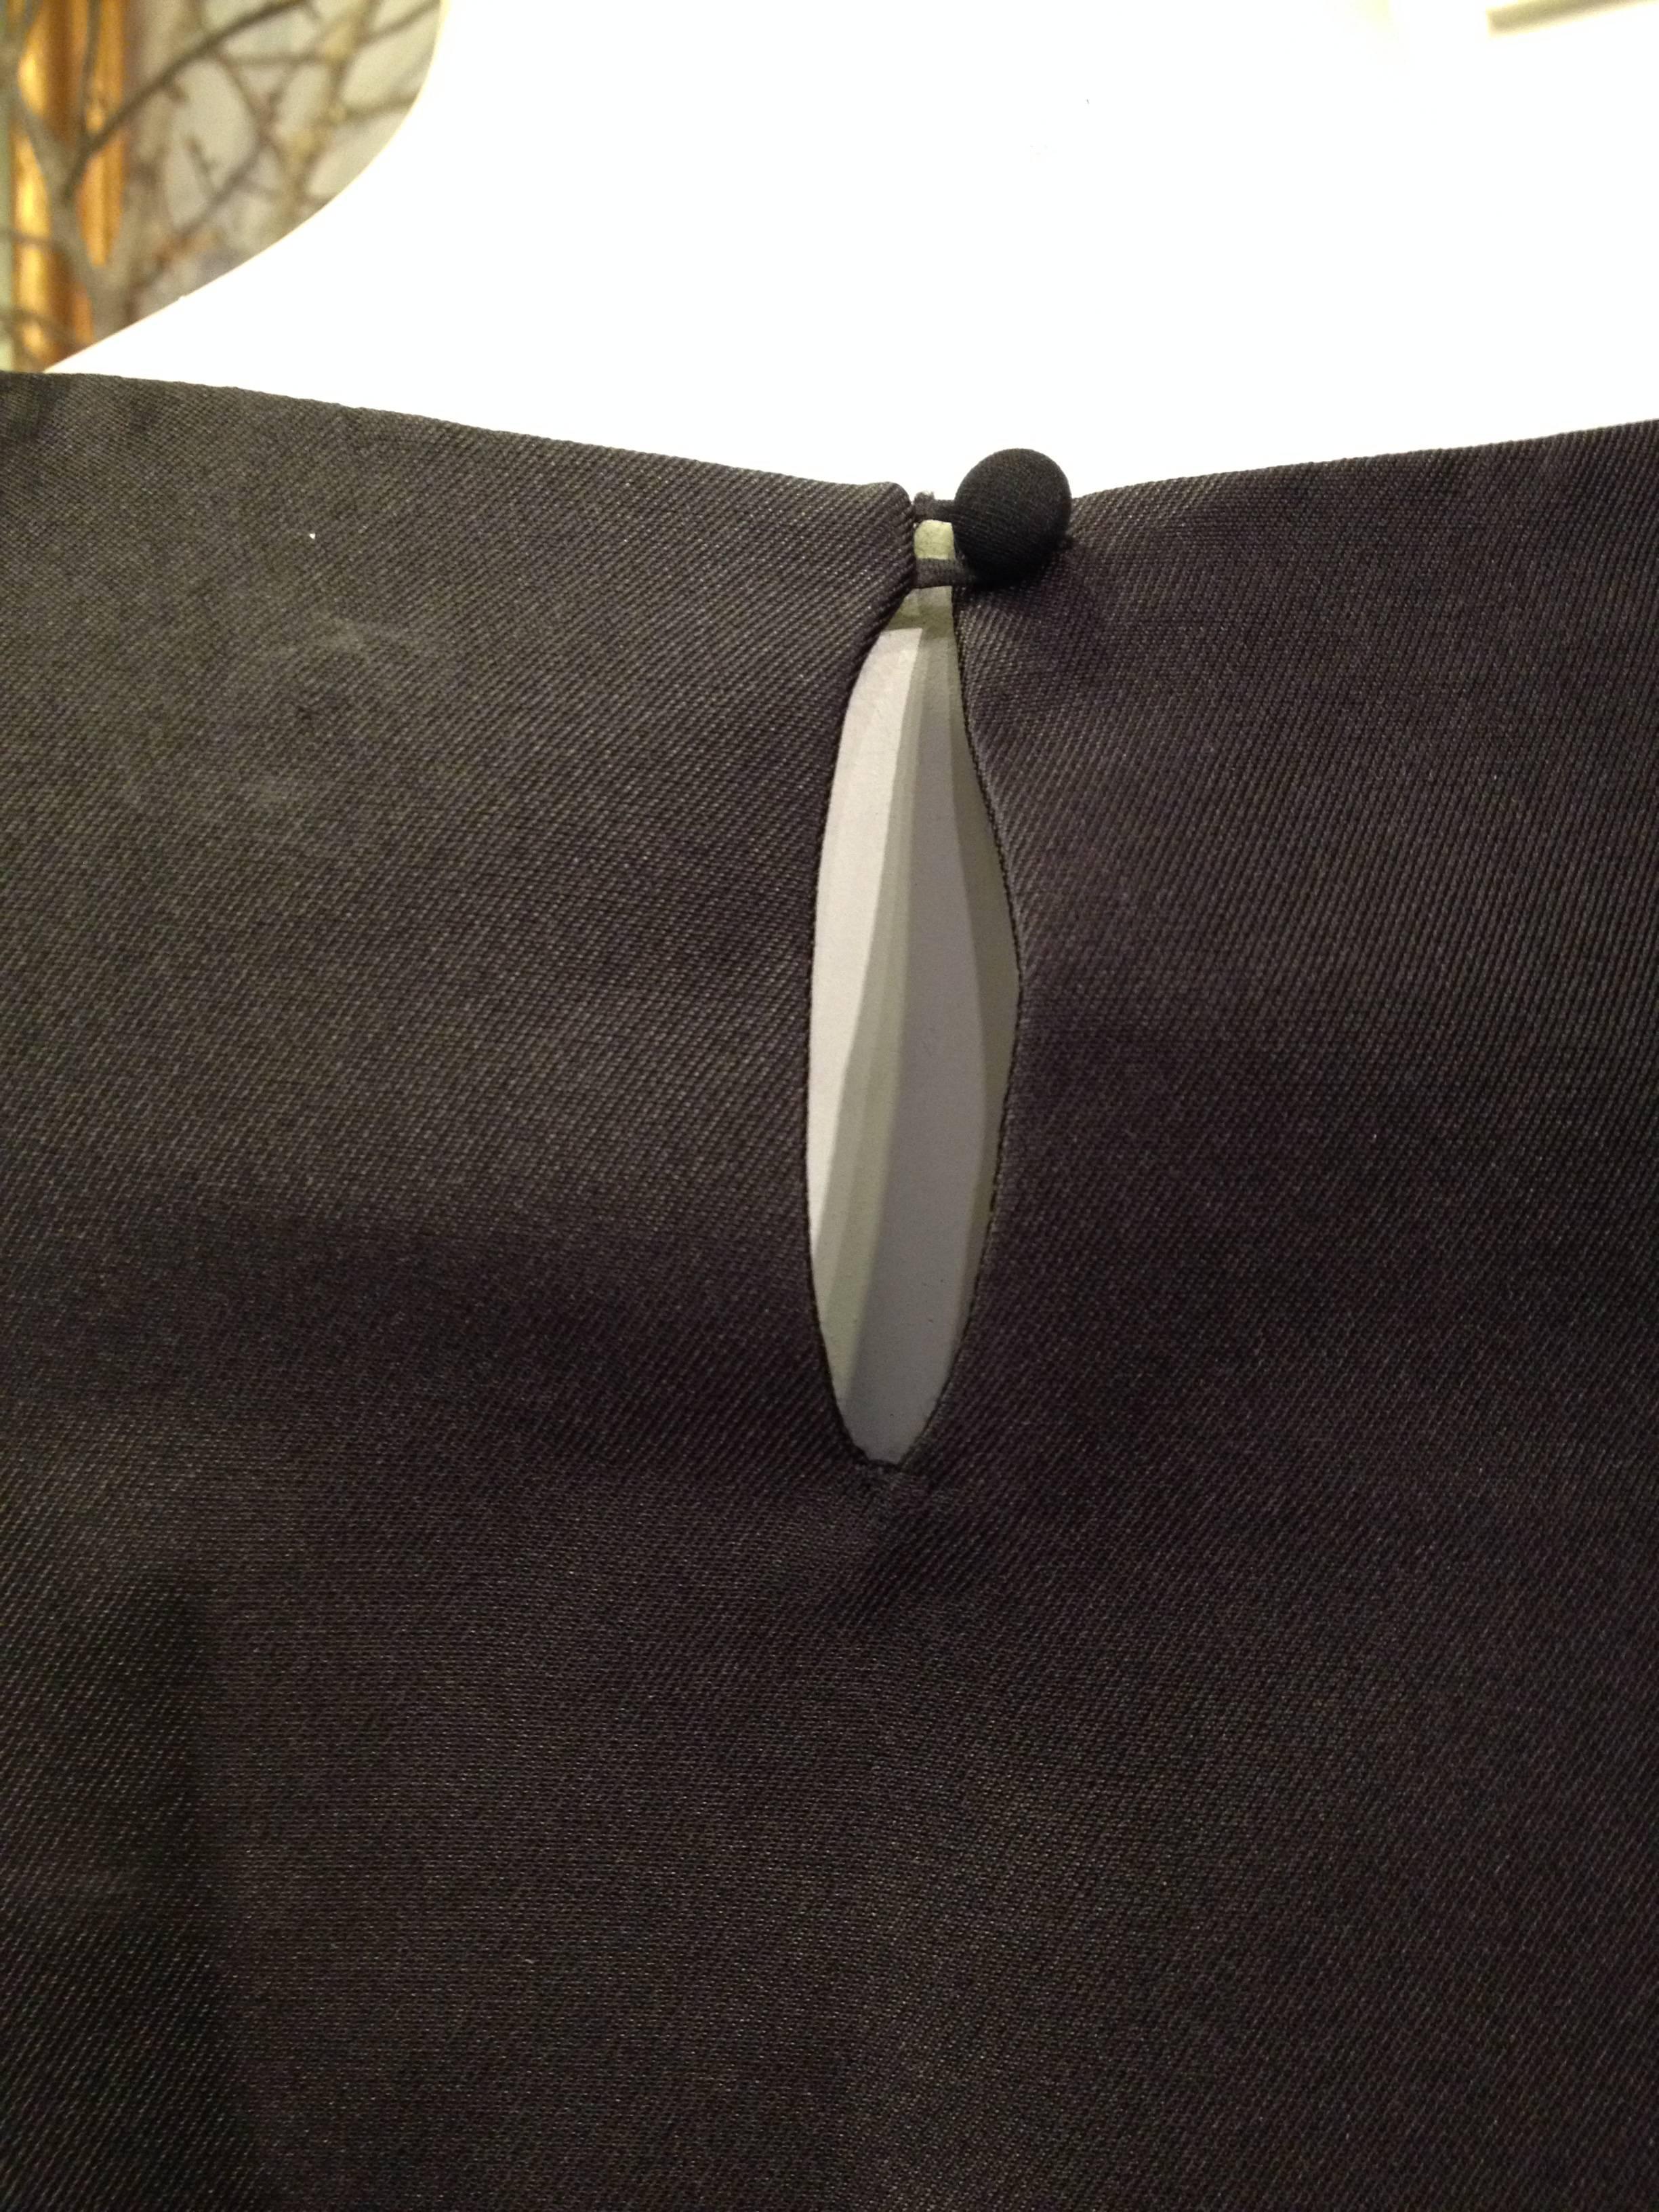 J. Mendel Black Silk Dress with Fur Epaulettes Size 10 4